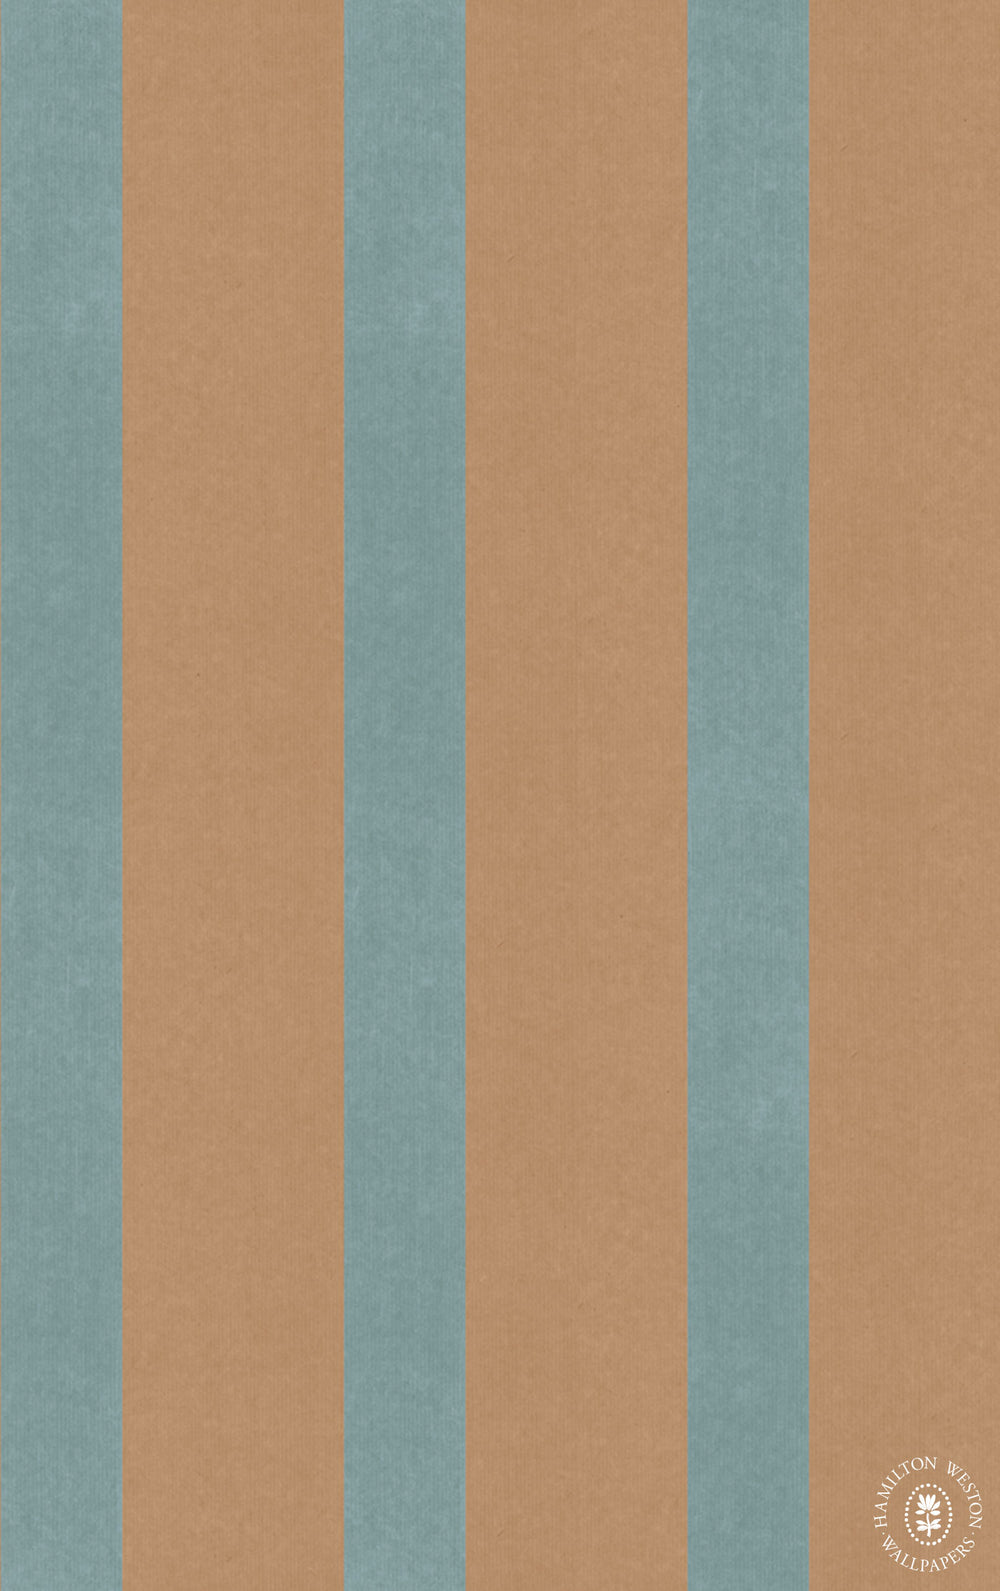 Hamilton-weston-wallpaper-adam-bray-brown-paper-stripe-collection-brown-stripe-wallpaper-british-collaboration-teal-08